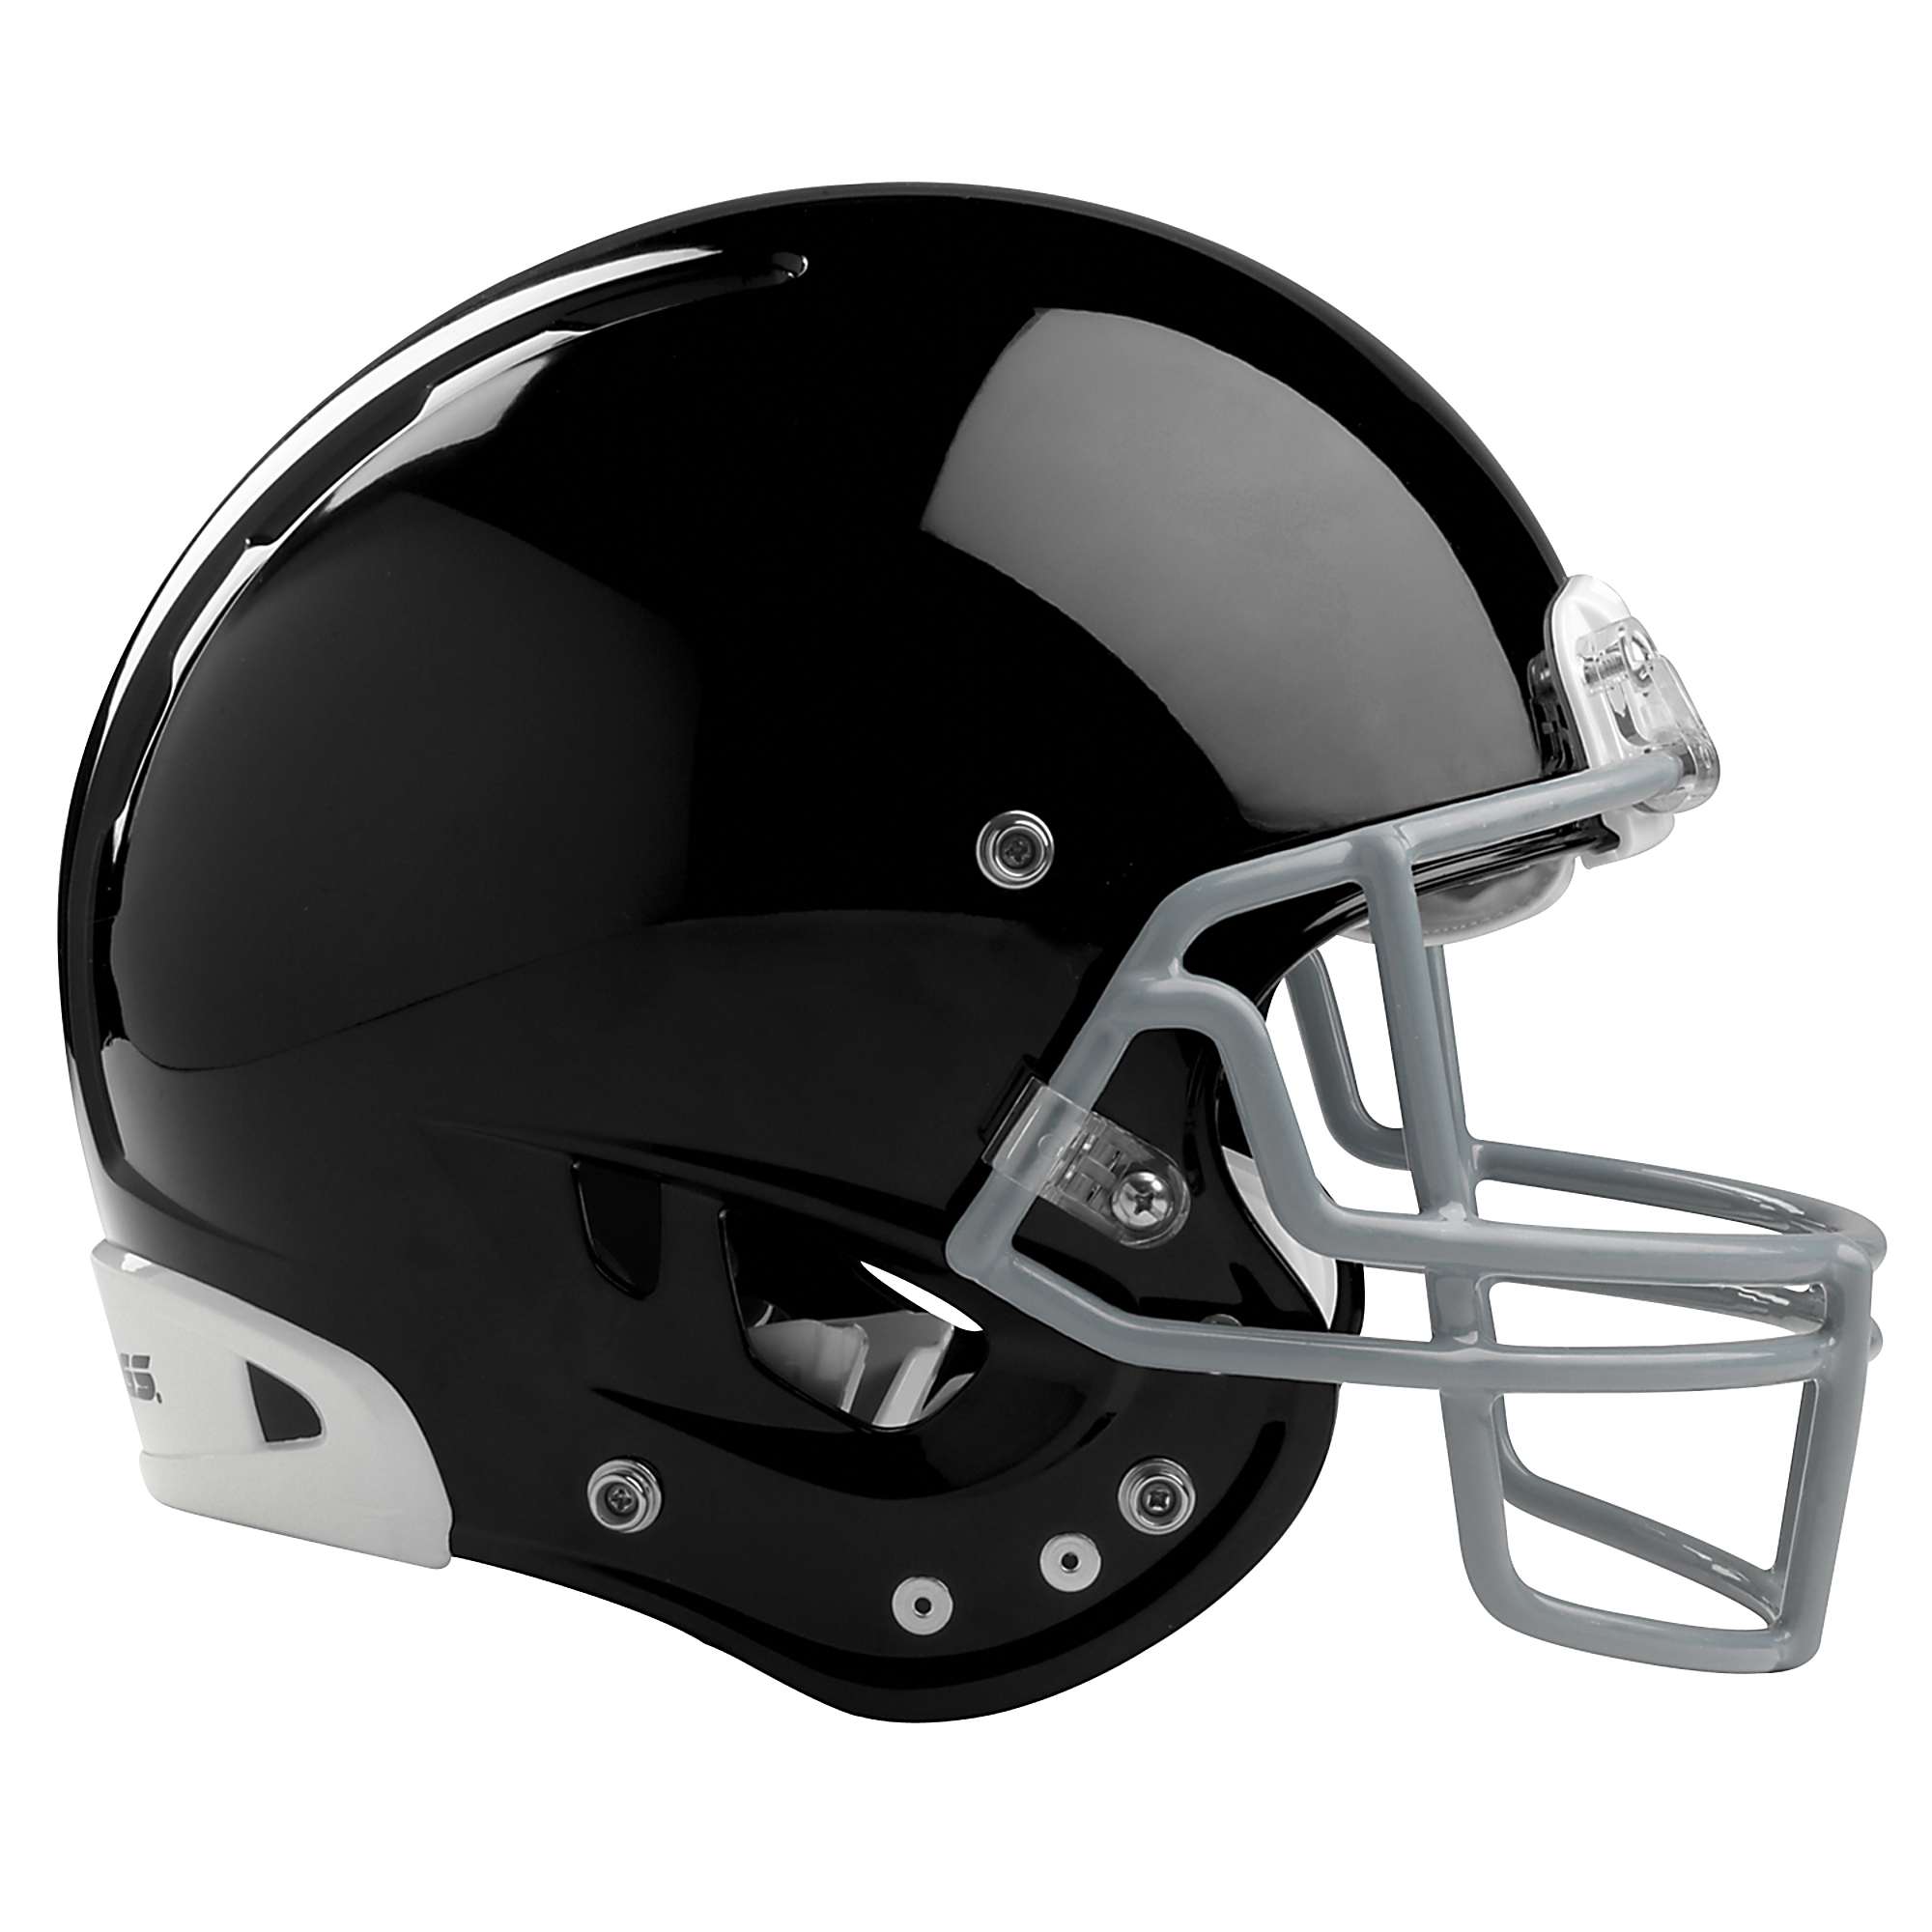 Rawlings Youth Nrg Force Football Helmet | eBay